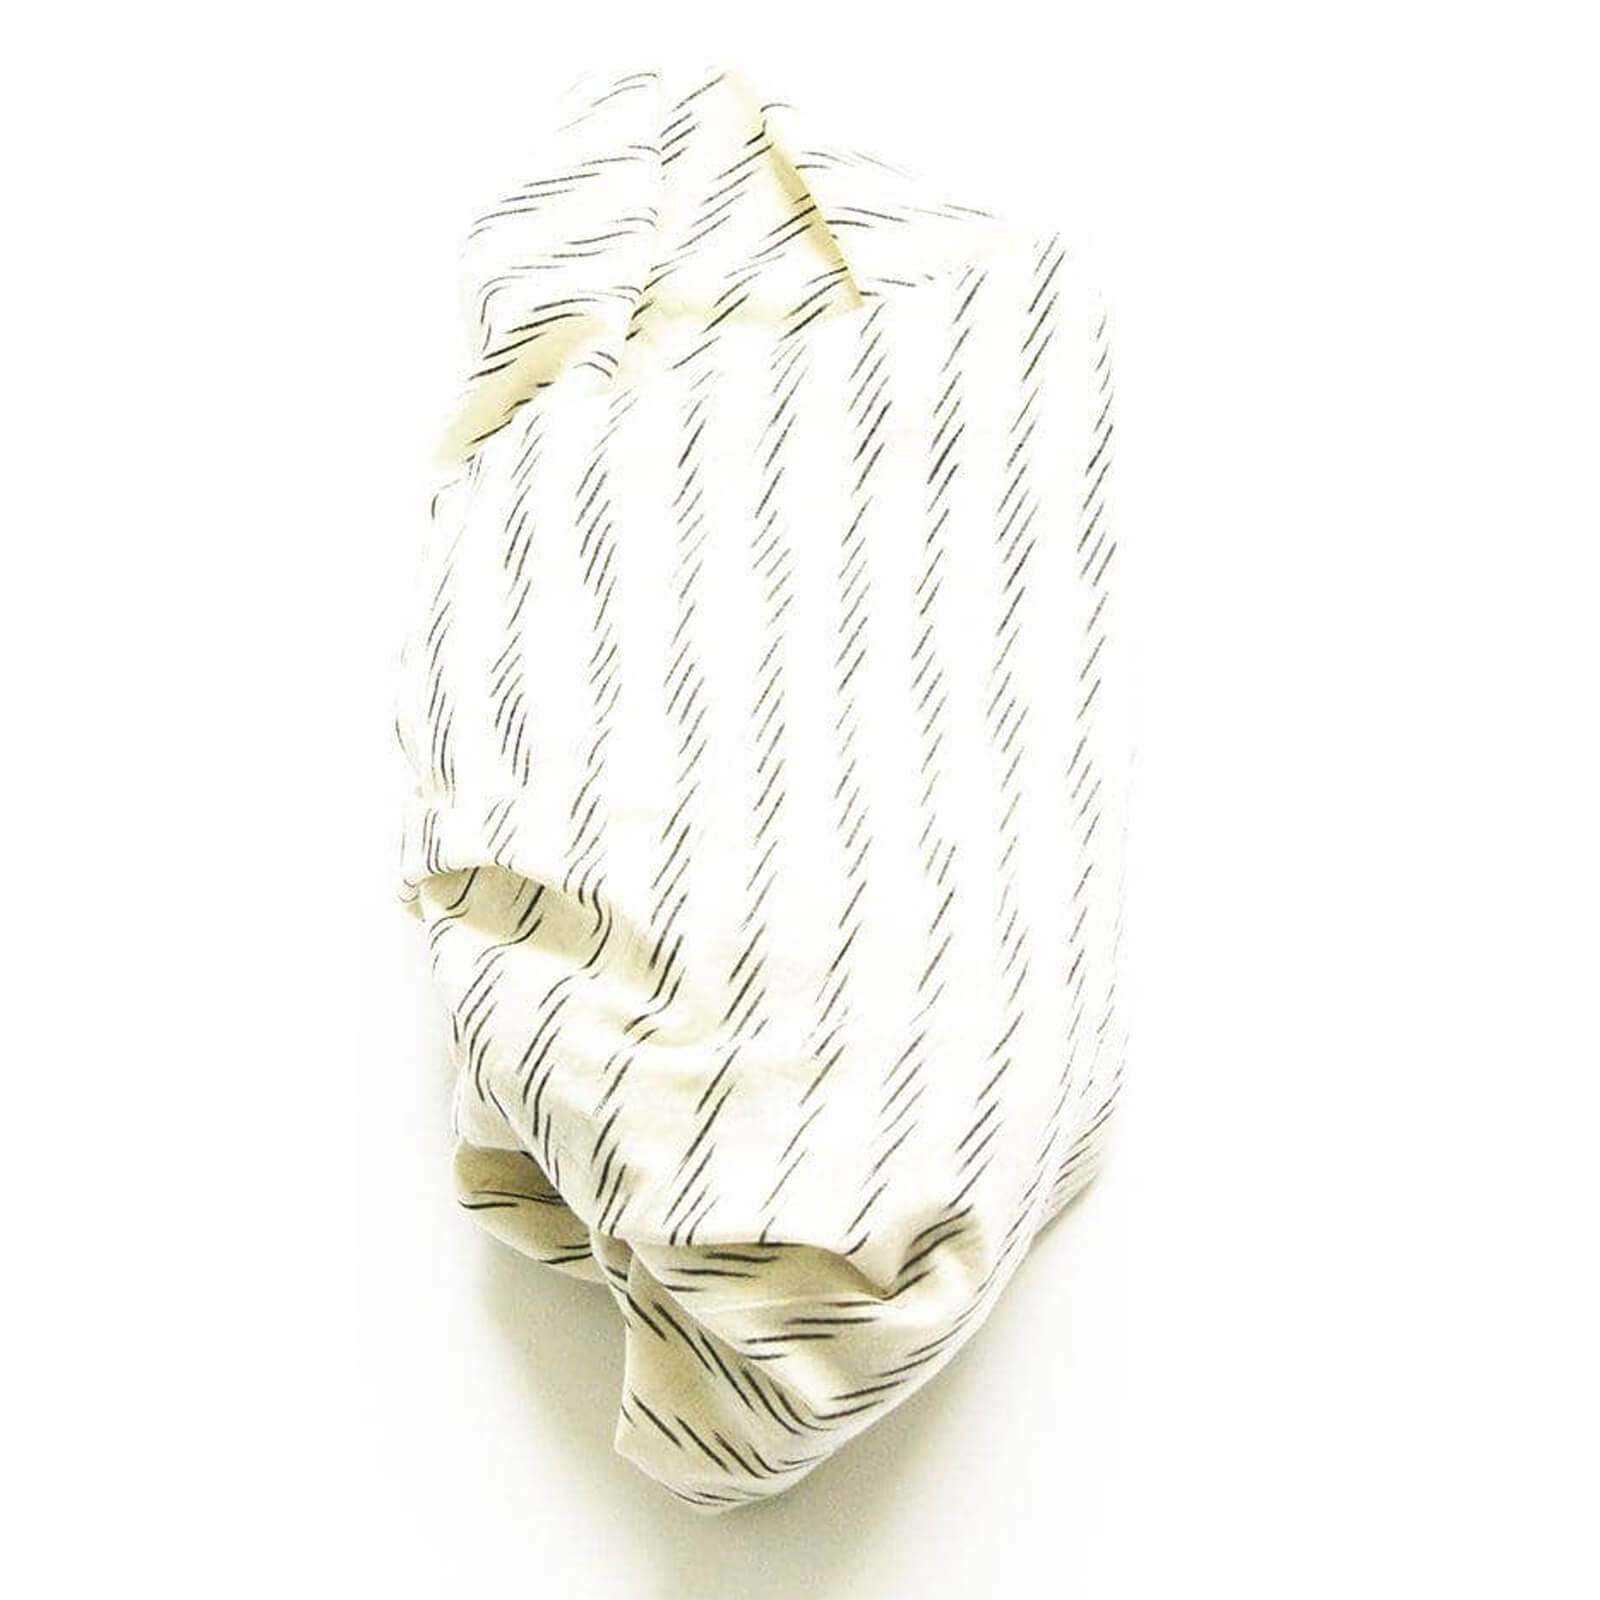 Handmade Cotton Ikat Swaddle Blanket - White and Black Zebra Stripe